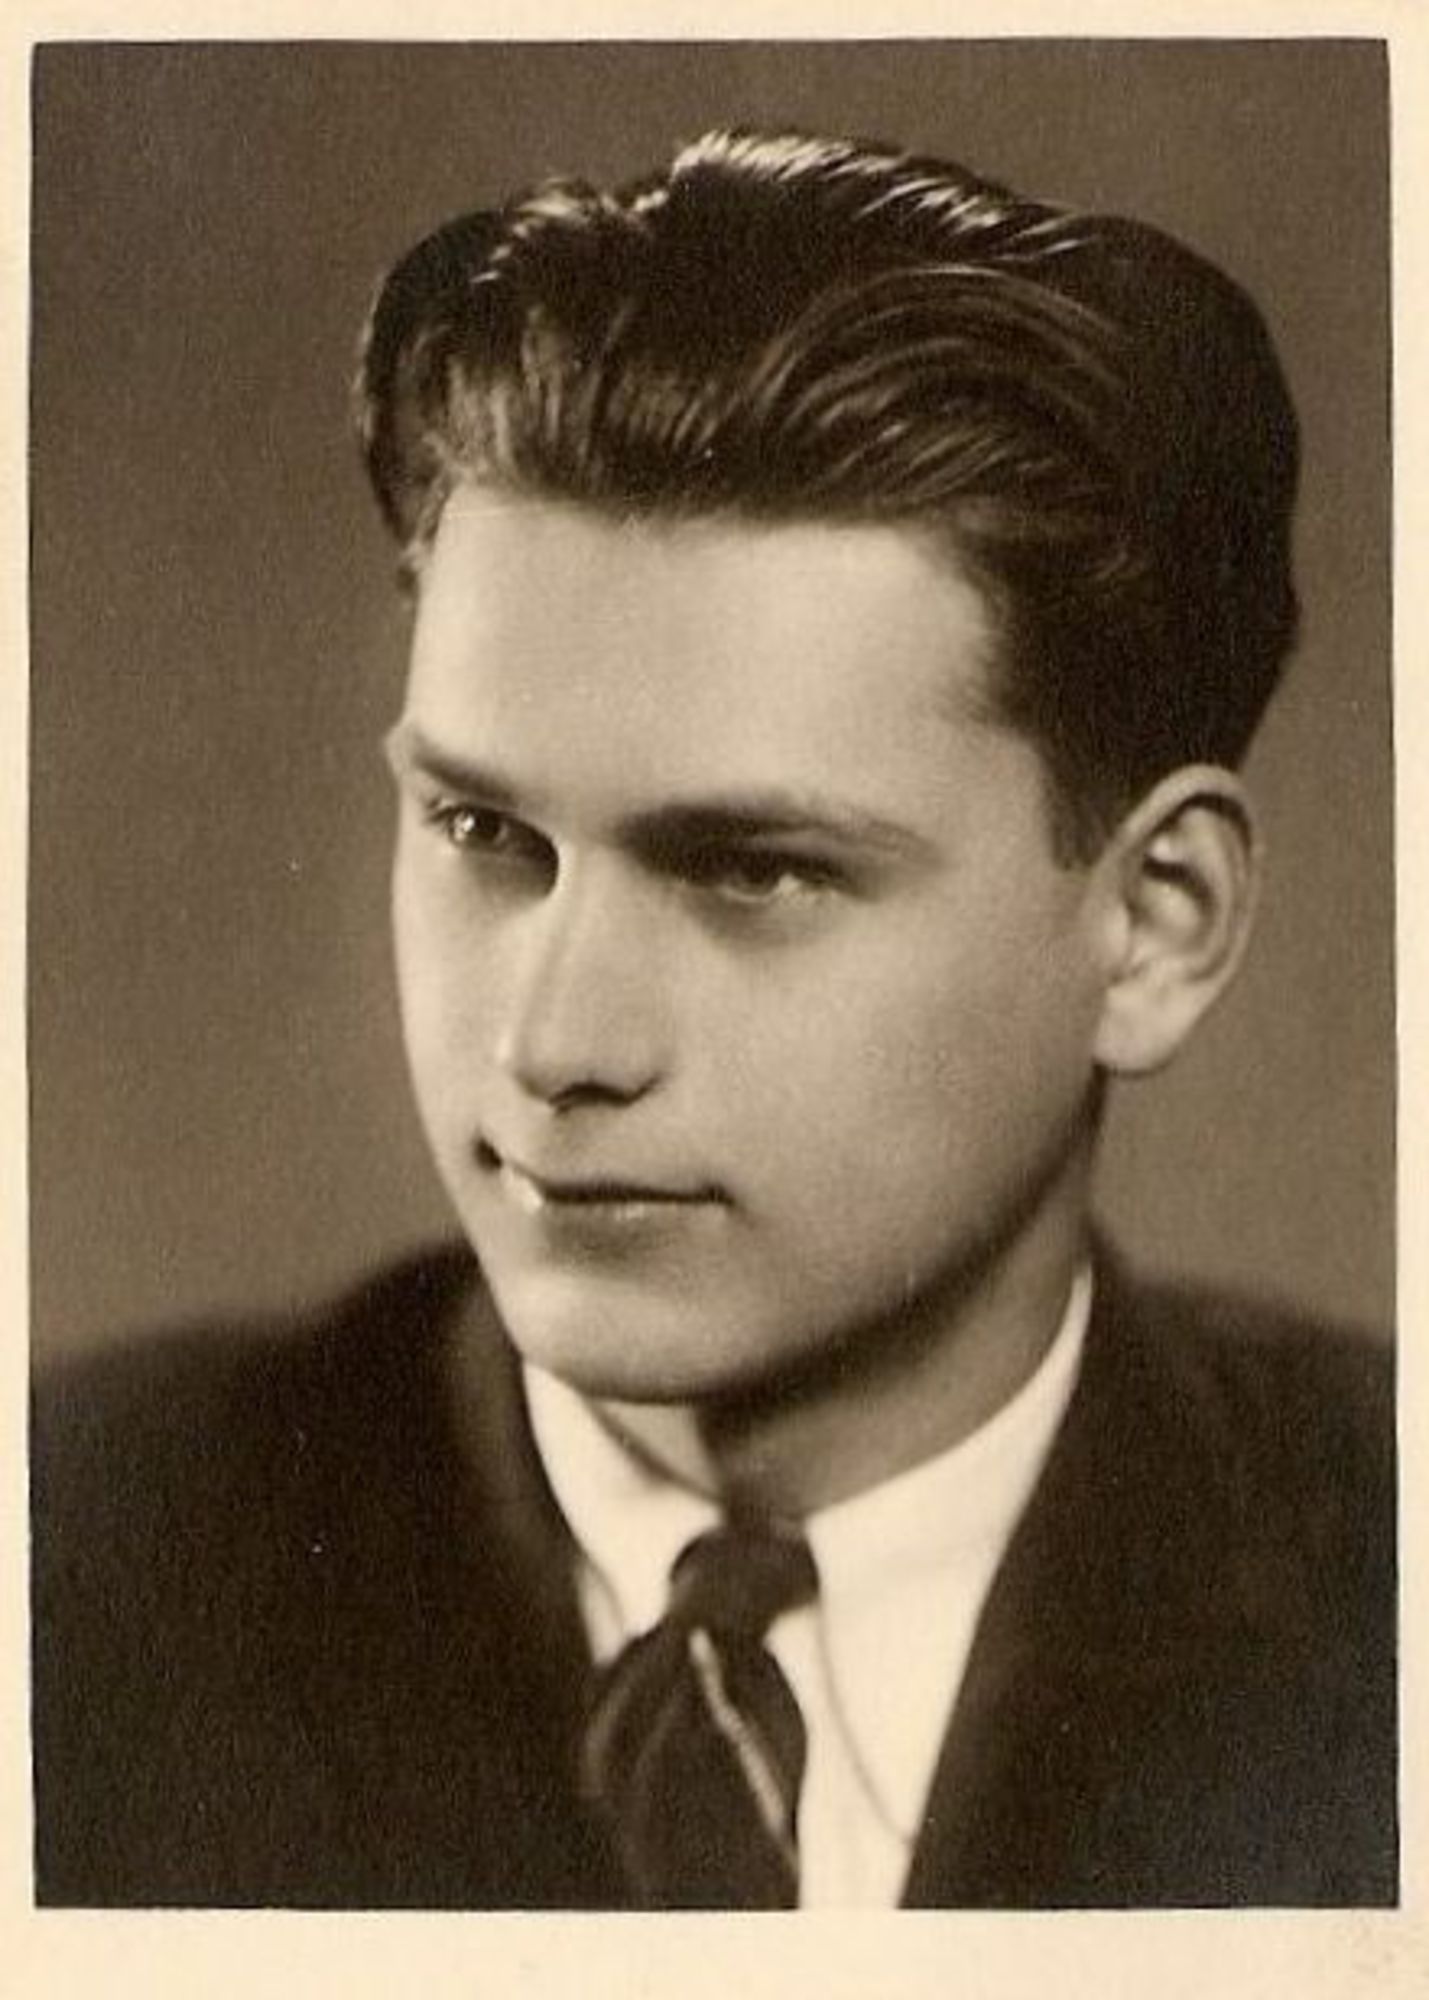 Graduation picture of Lumír Čermák from May 1943